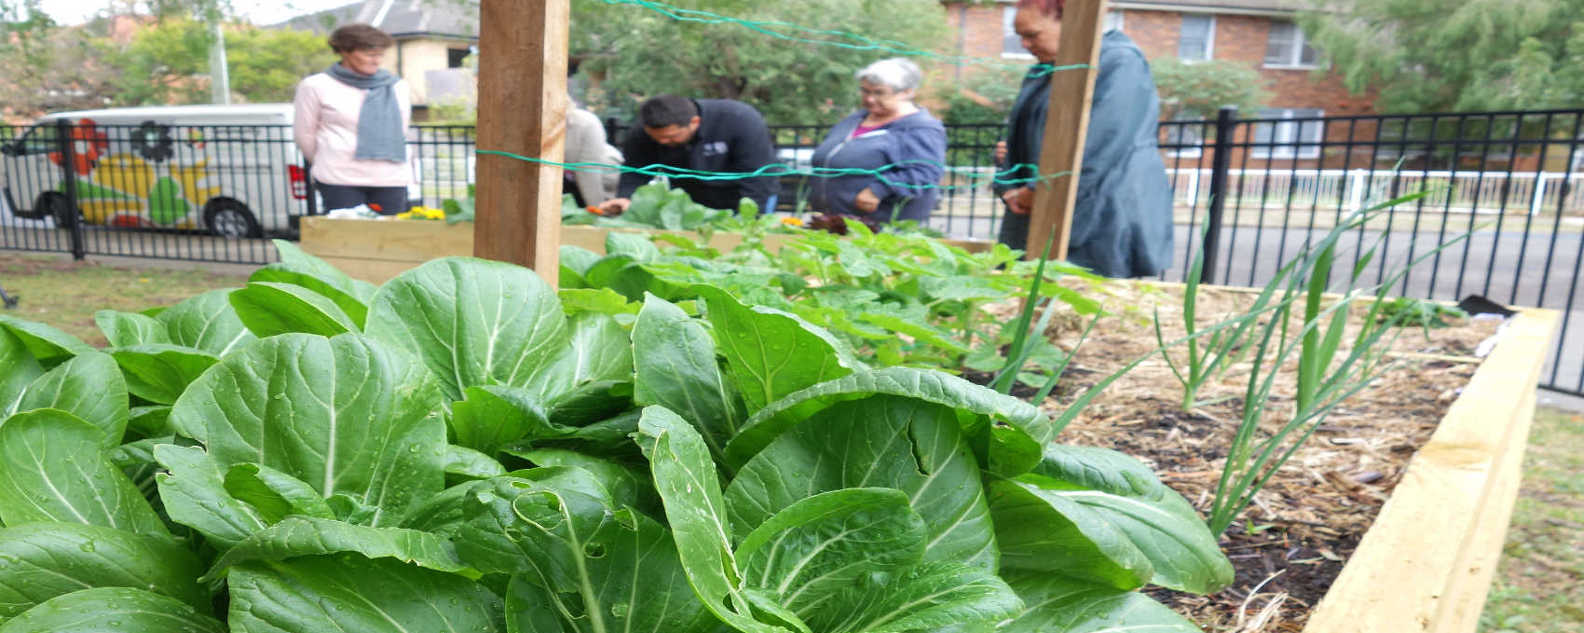 vege garden cabbage hero